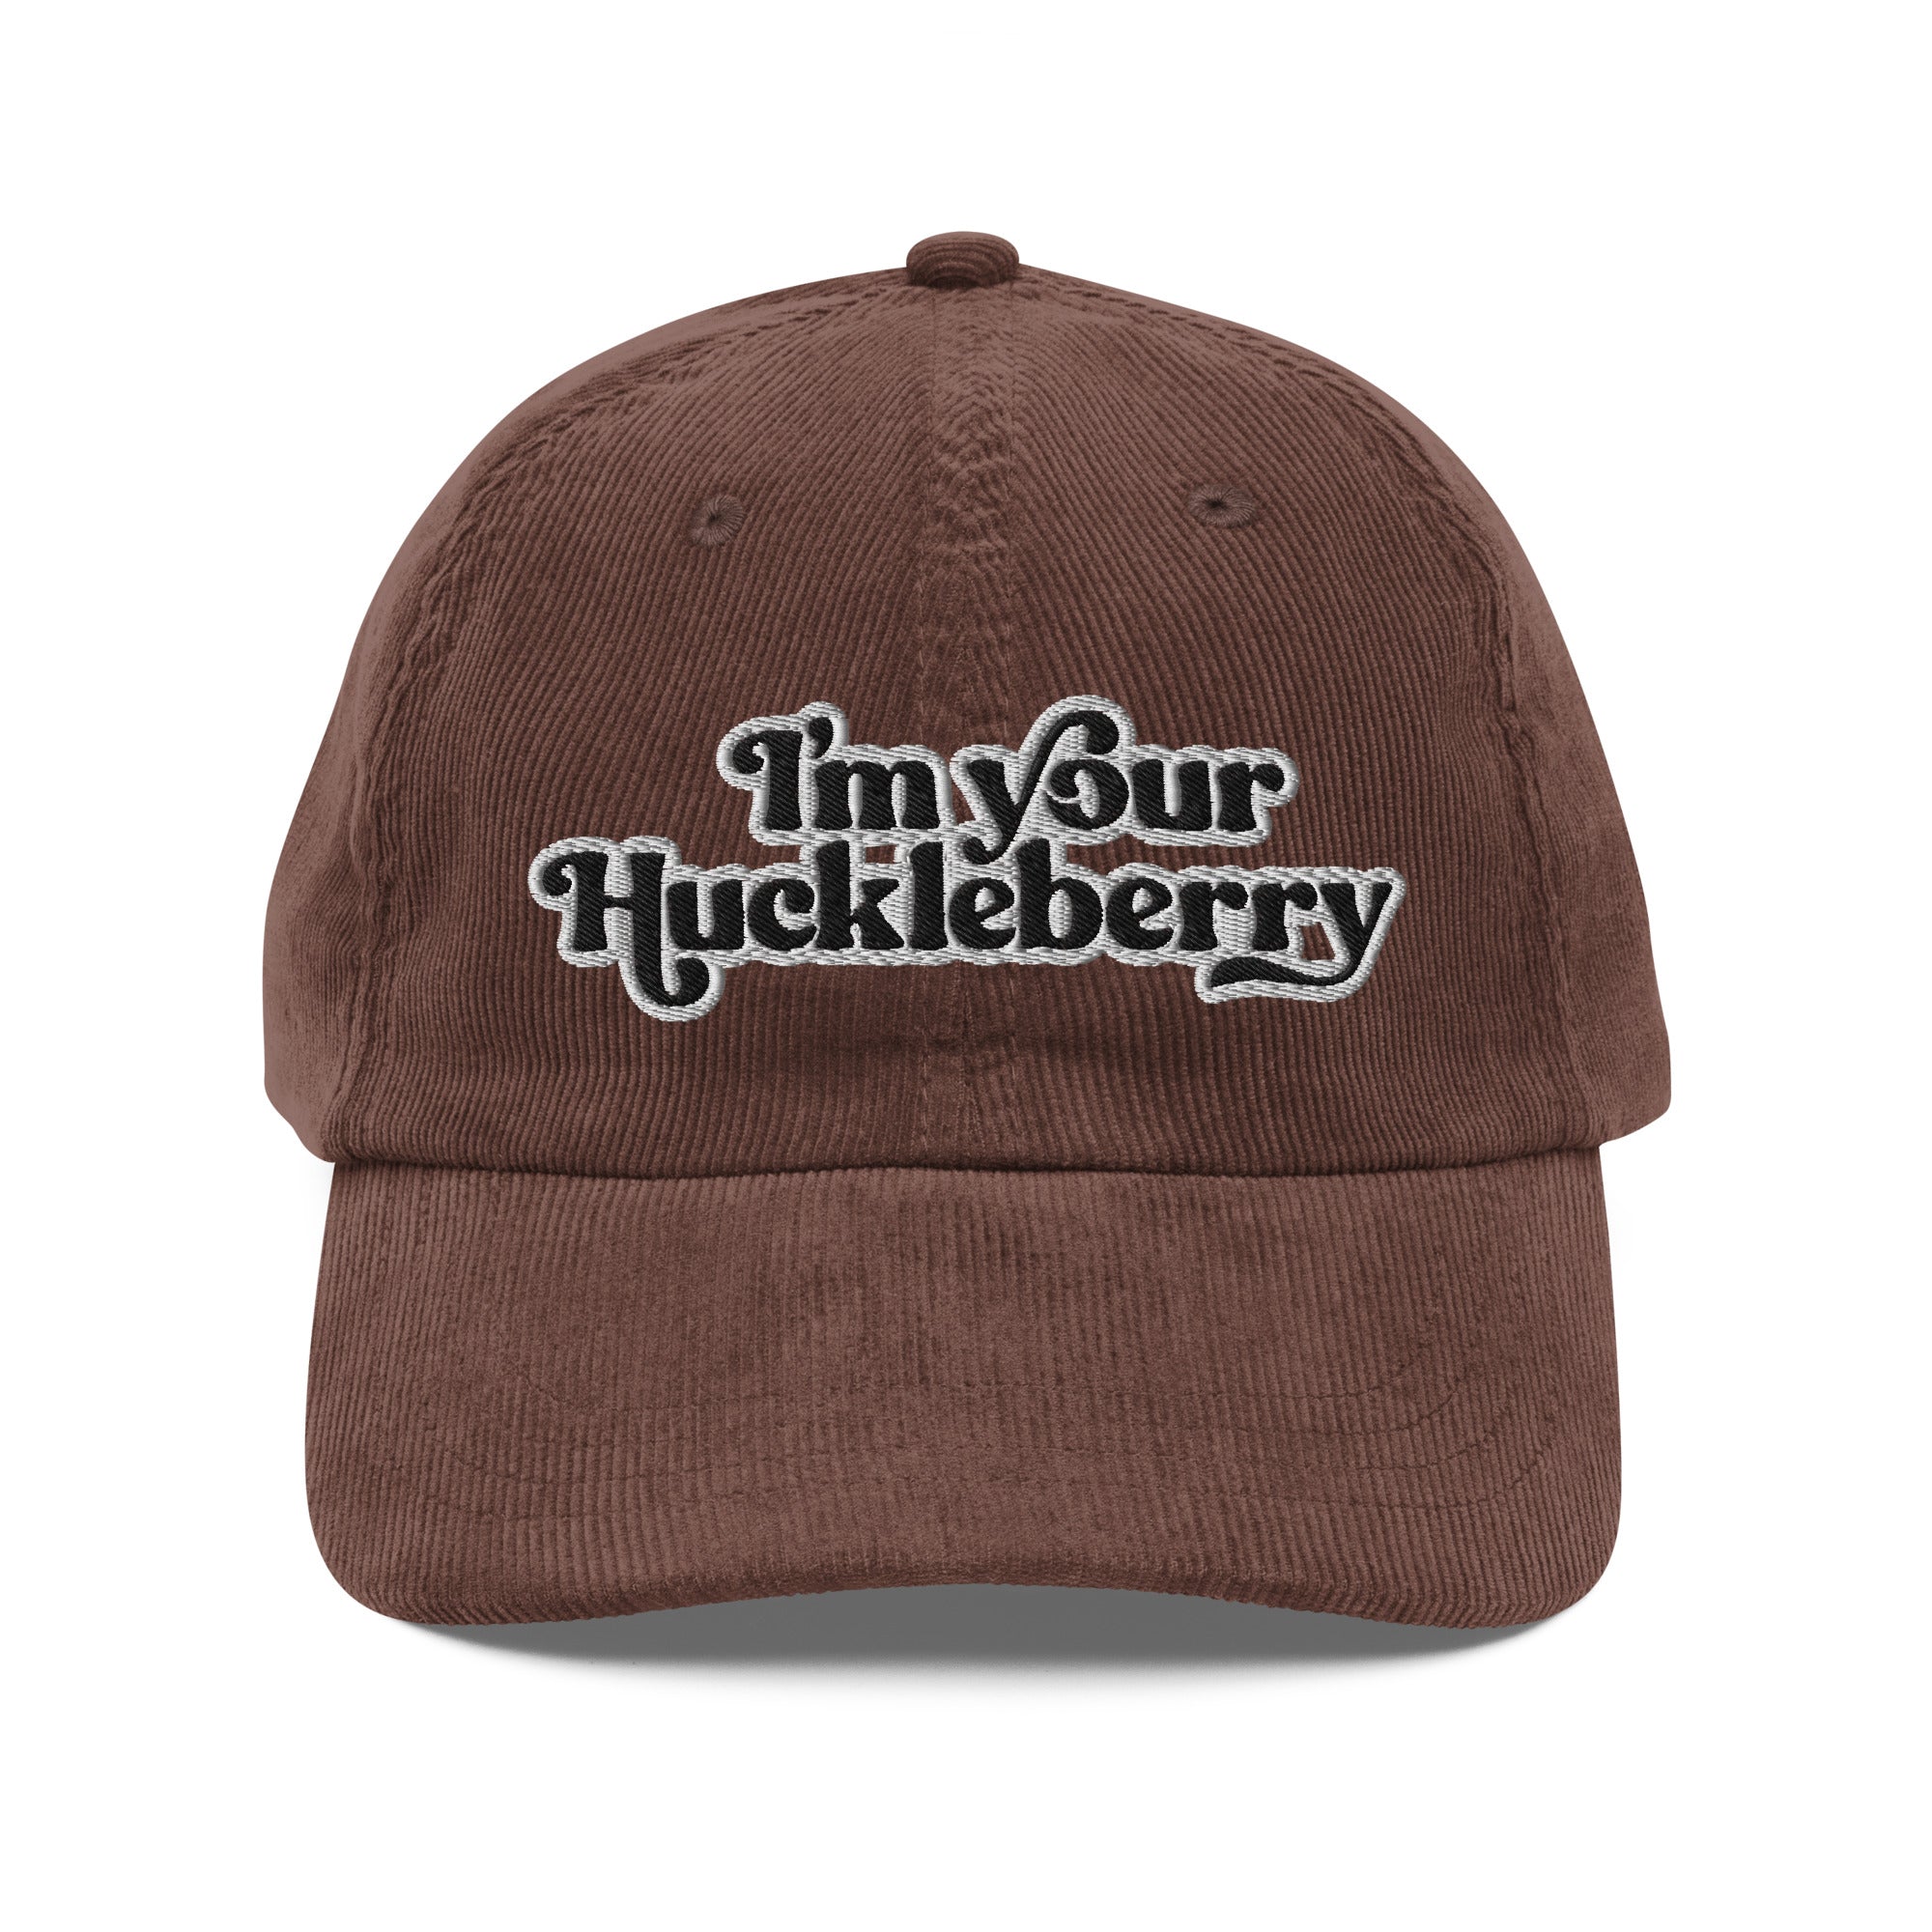 I'm Your Huckleberry Vintage Corduroy Cap